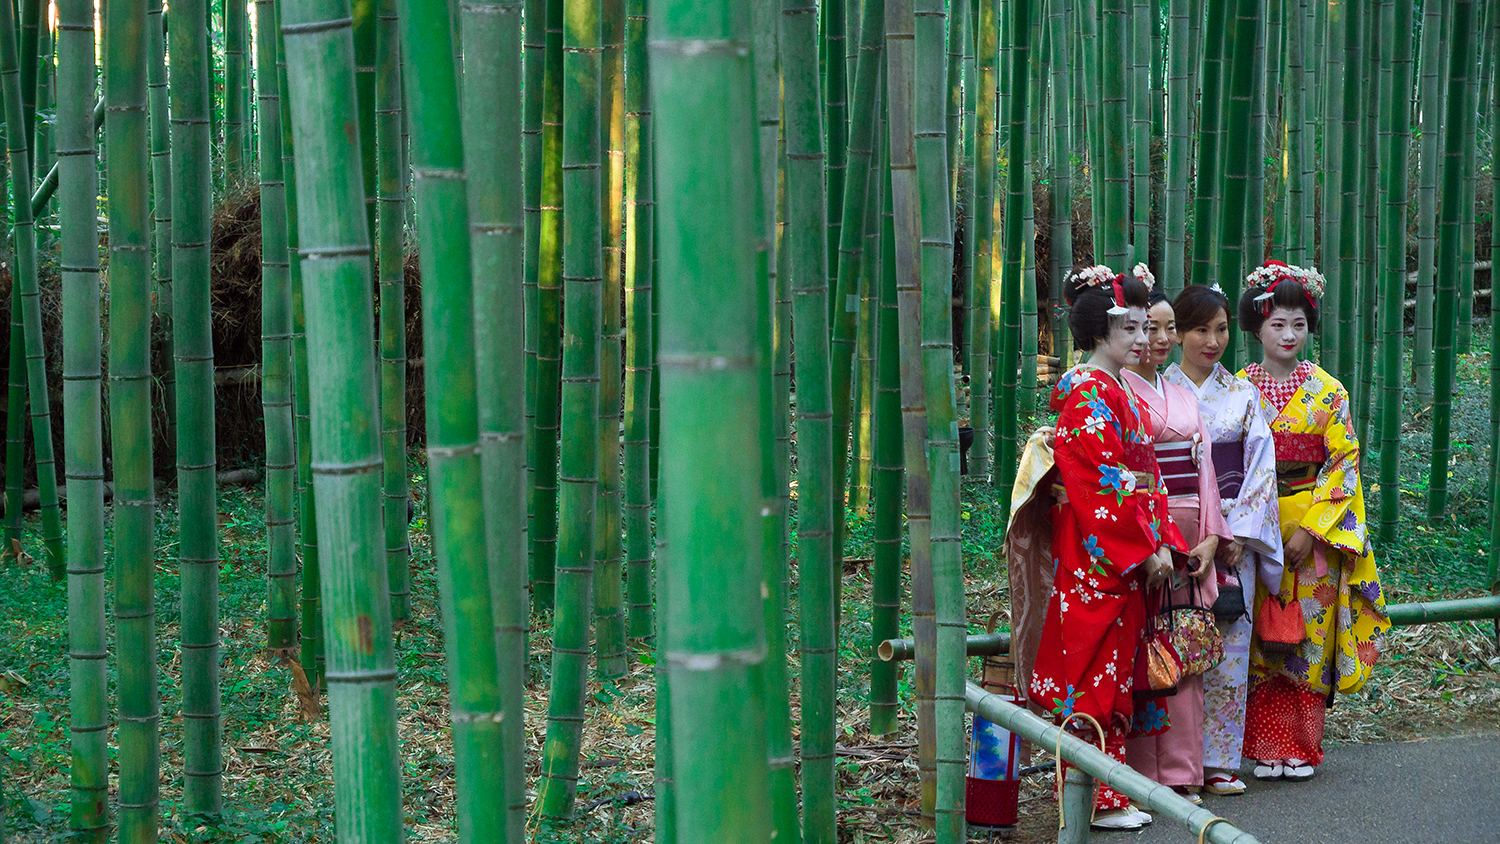 Japanese geishas pose in a lush green bamboo grove